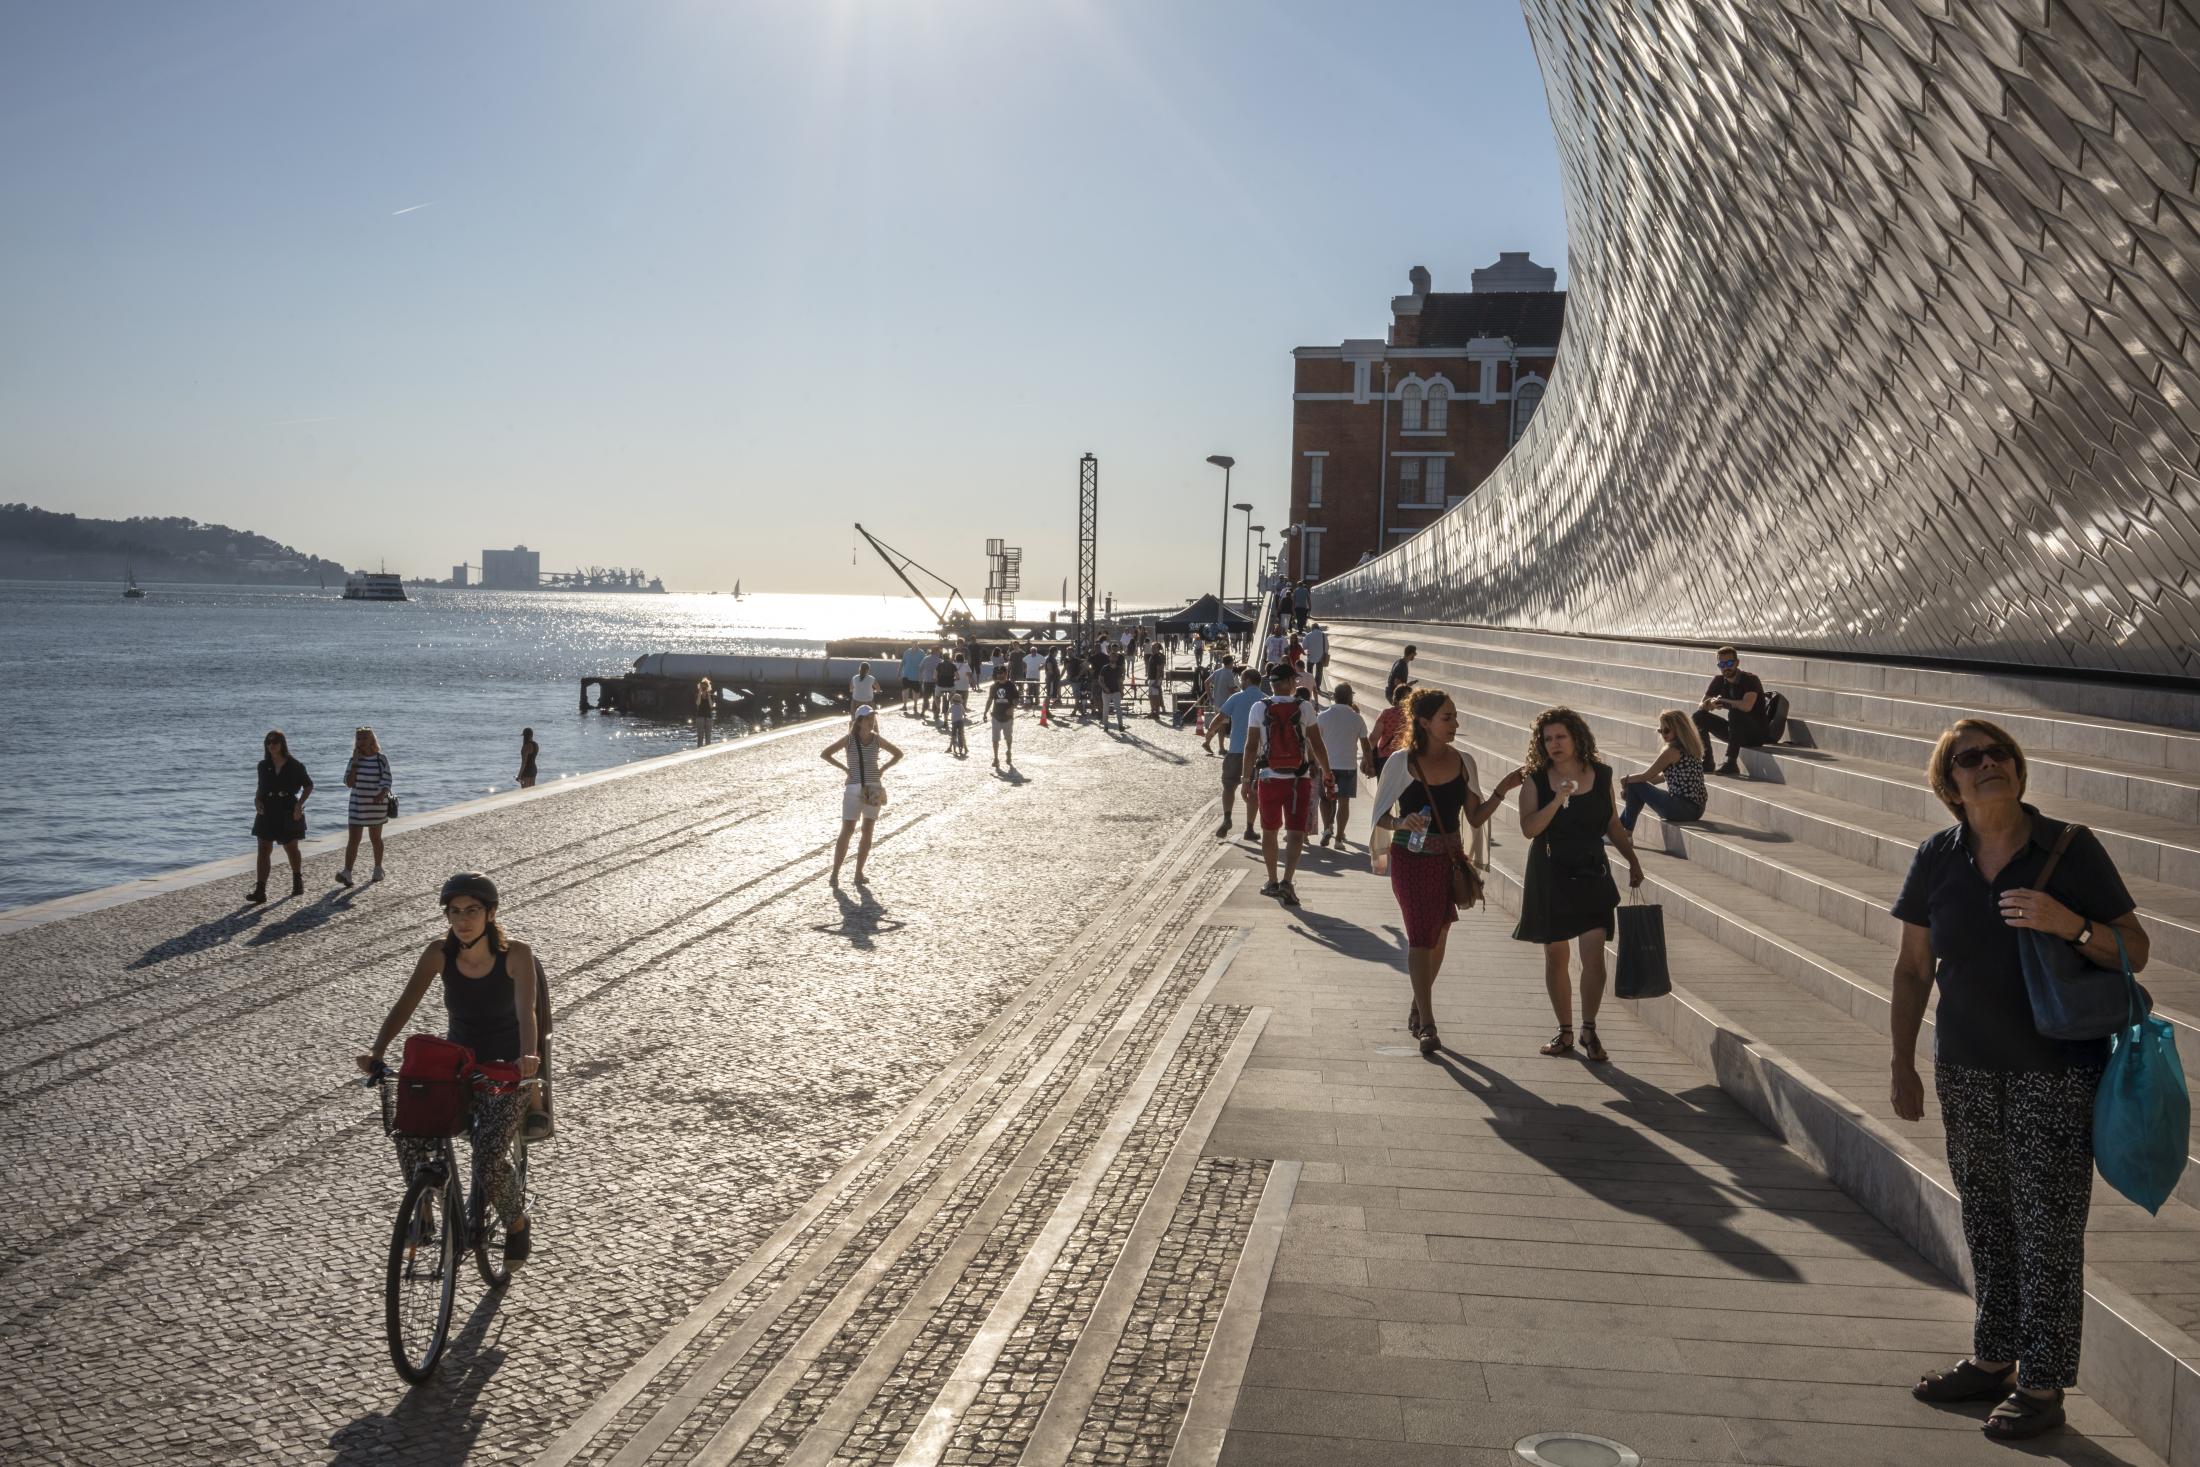 Lisbon - MATT, a new contemporary art museum inaugurated in 2016...